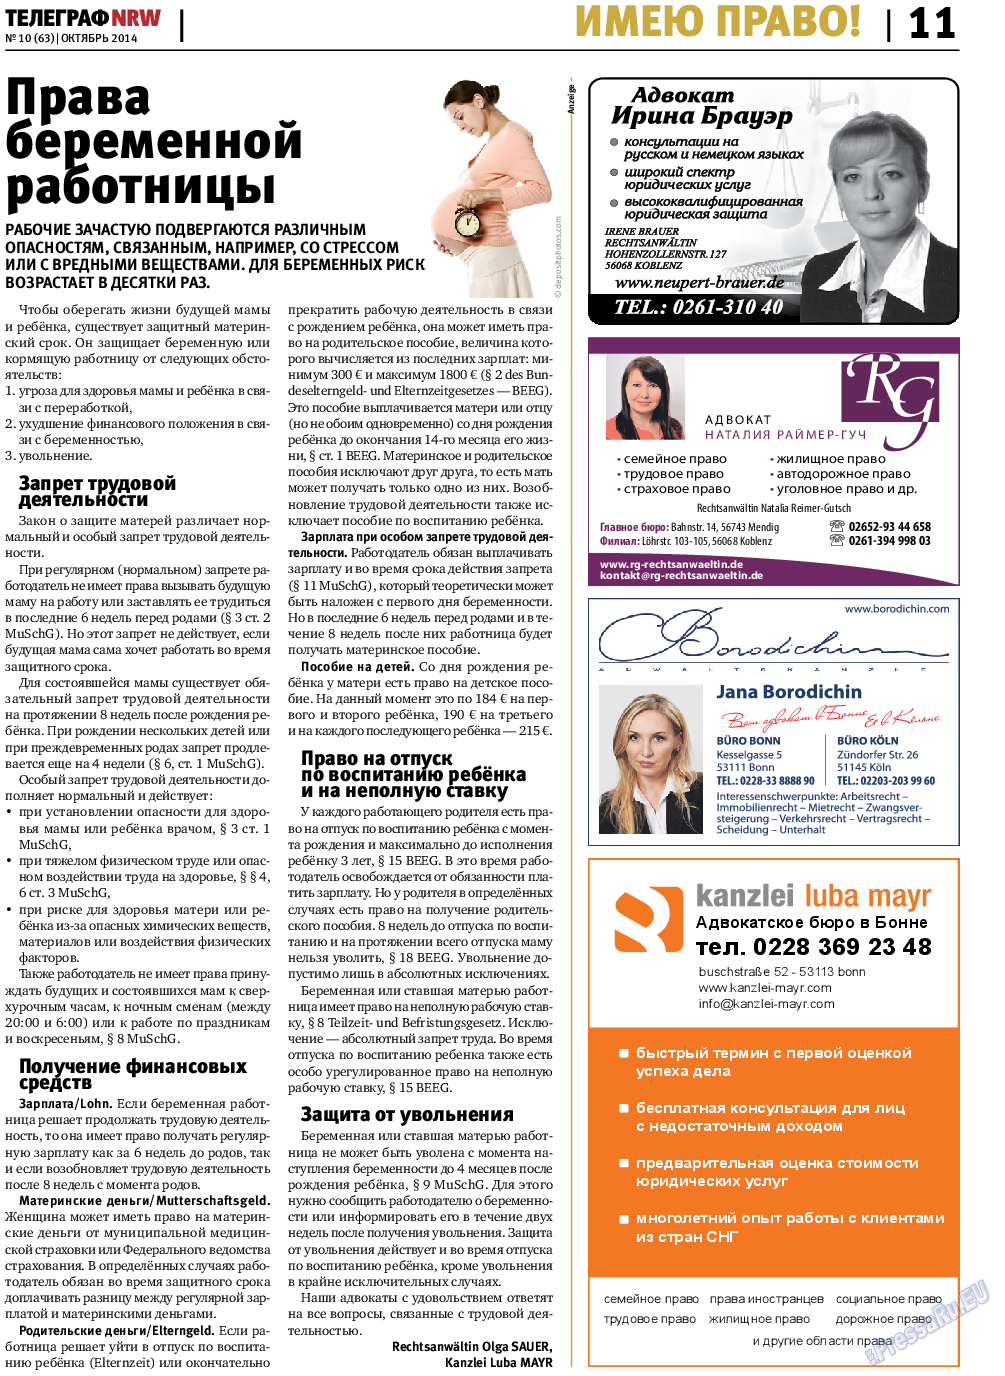 Телеграф NRW, газета. 2014 №10 стр.11